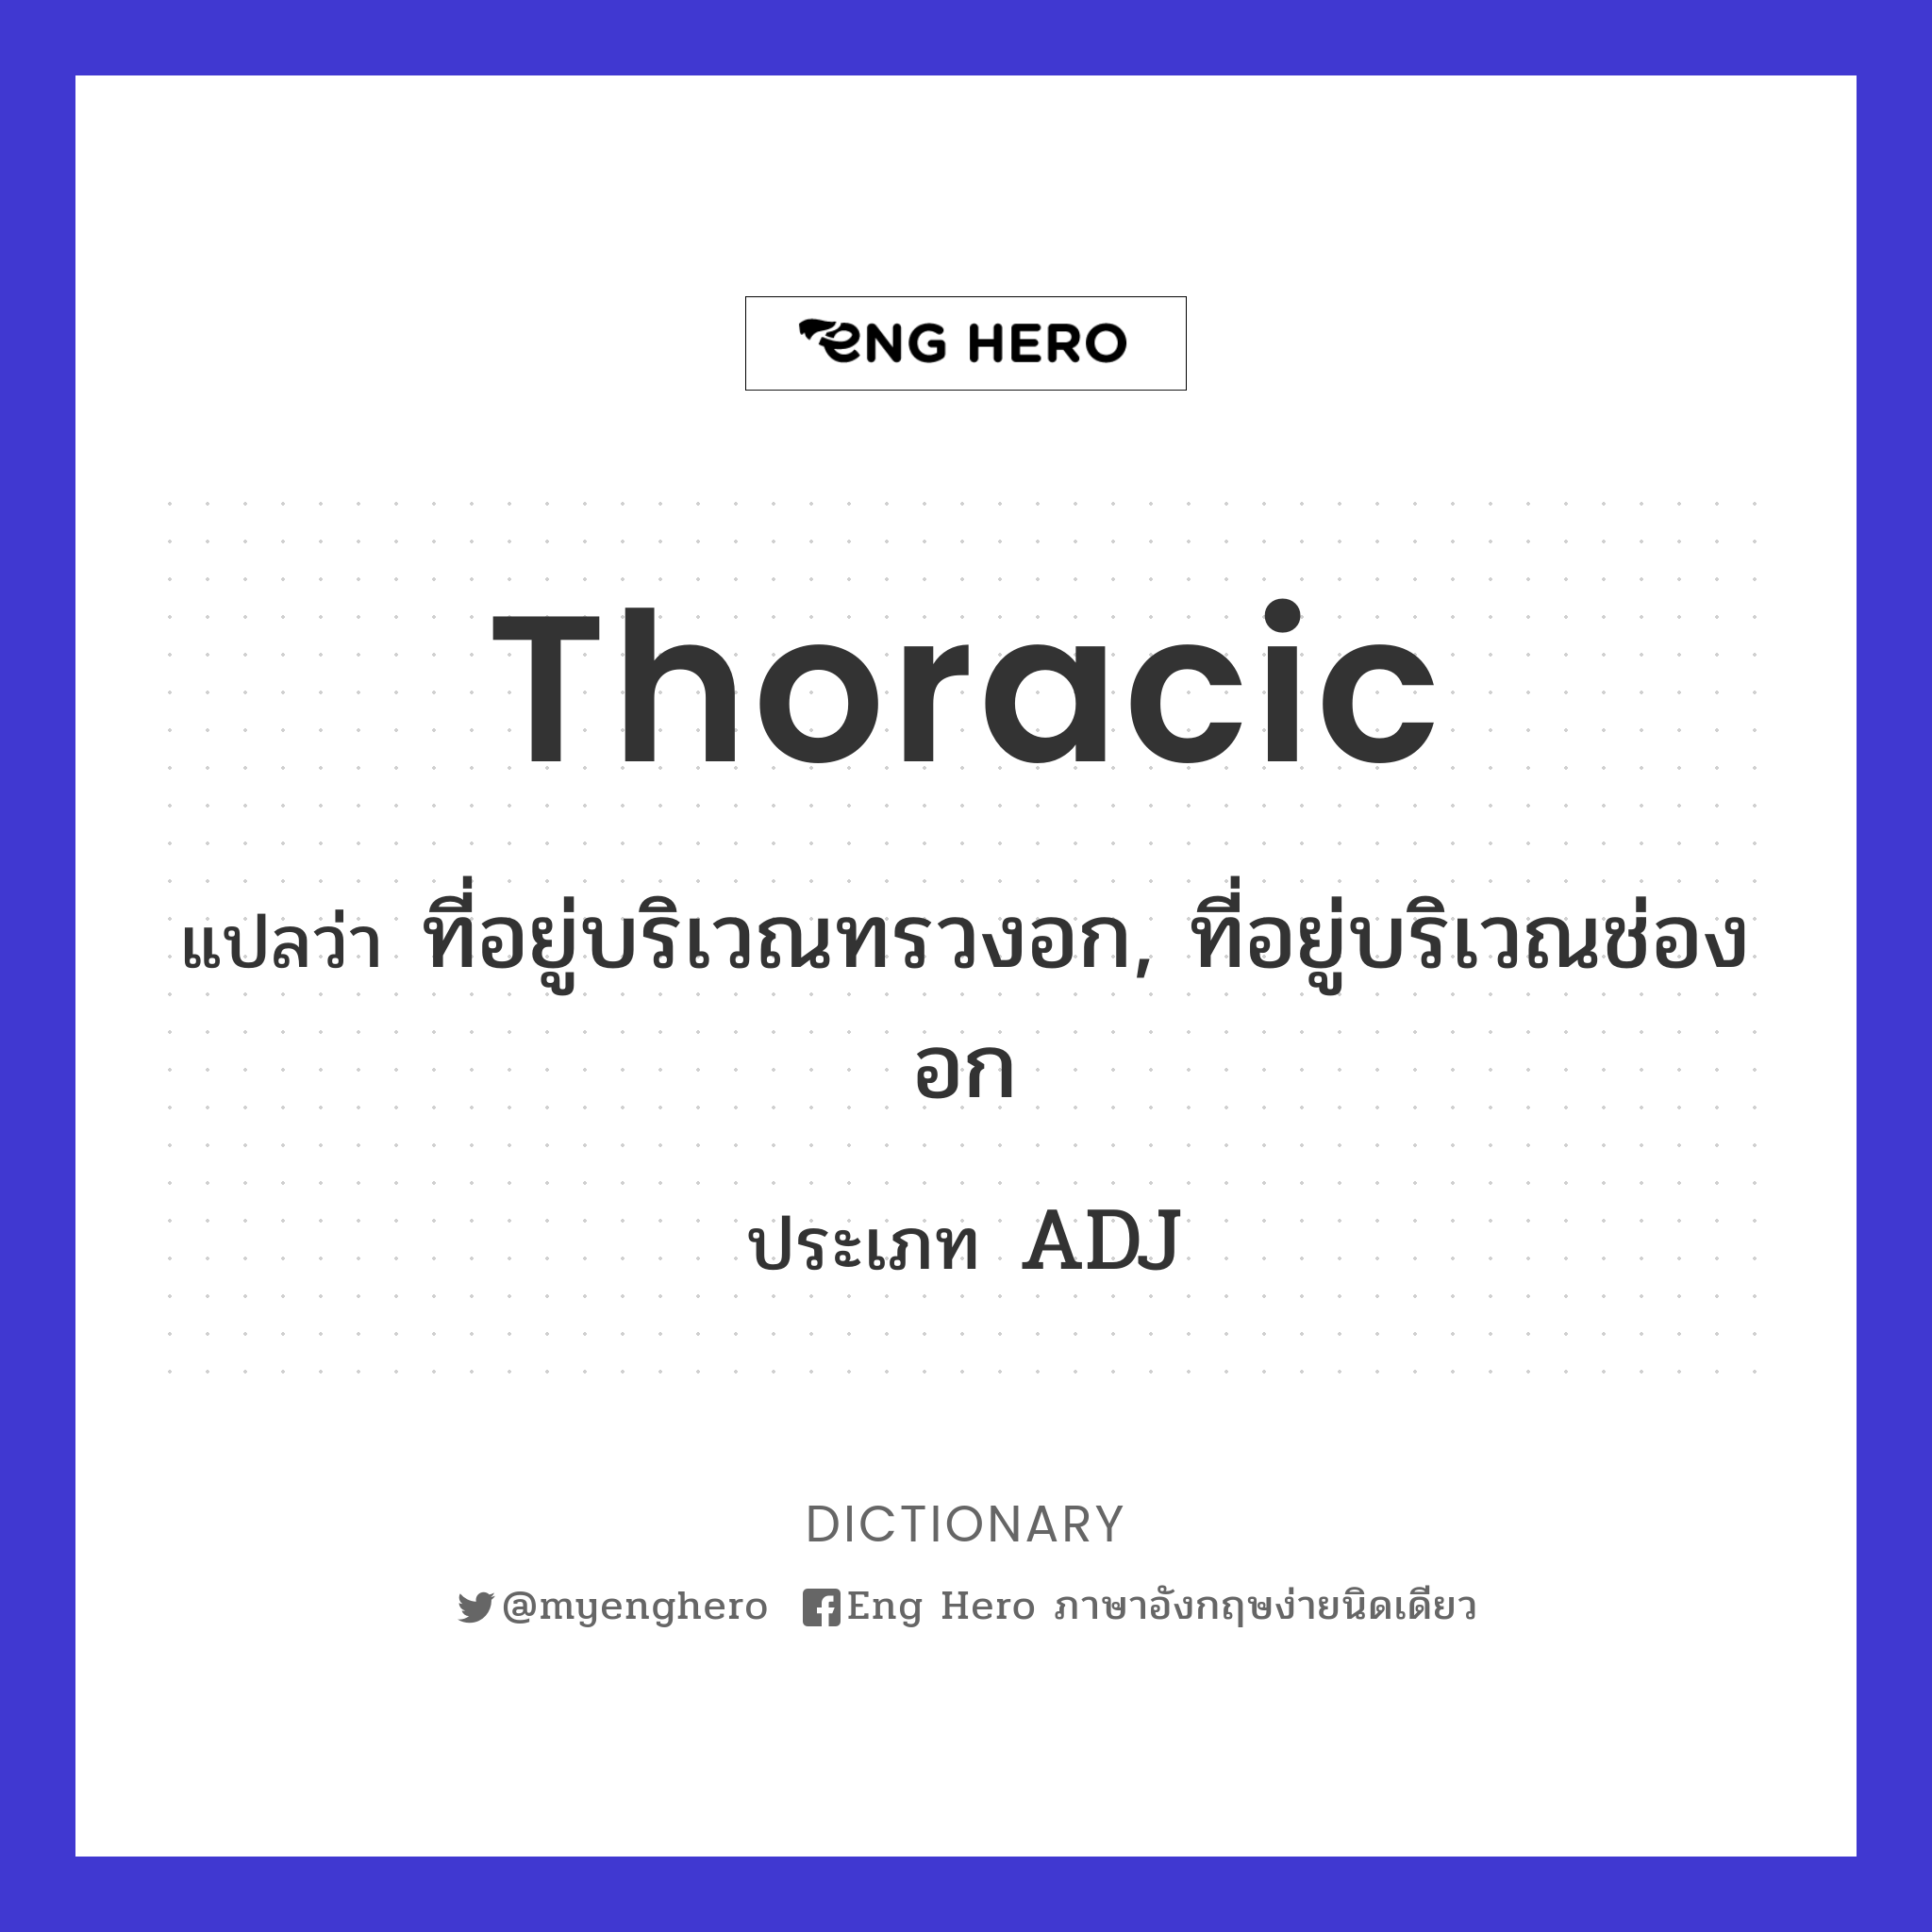 thoracic